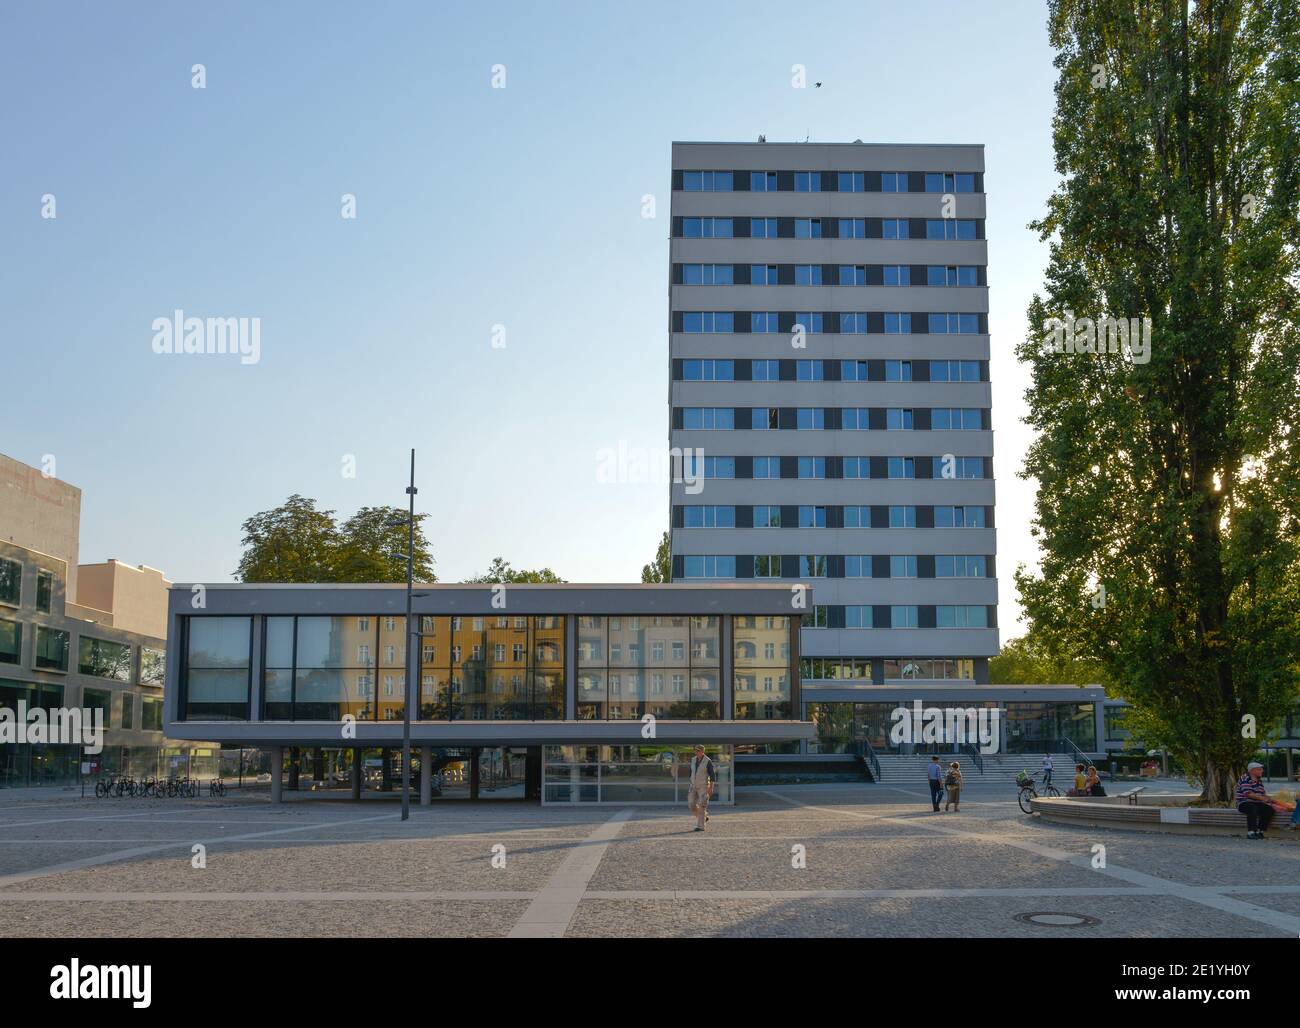 Platz vor Jobdem centre, Muellerstrasse, Wedding, Mitte, Berlin, Allemagne Banque D'Images